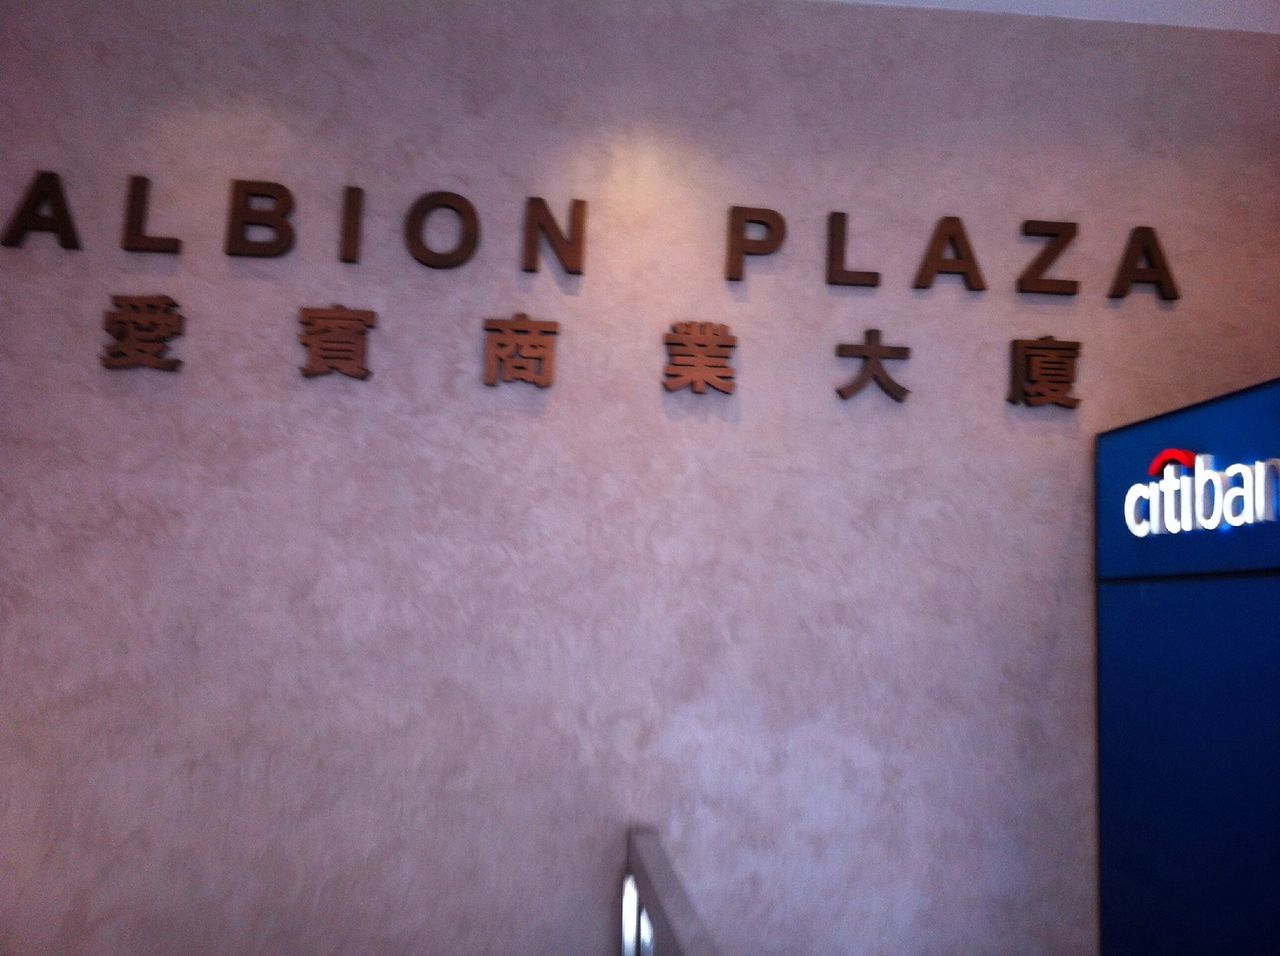 Albion Plaza 愛賓商業大廈